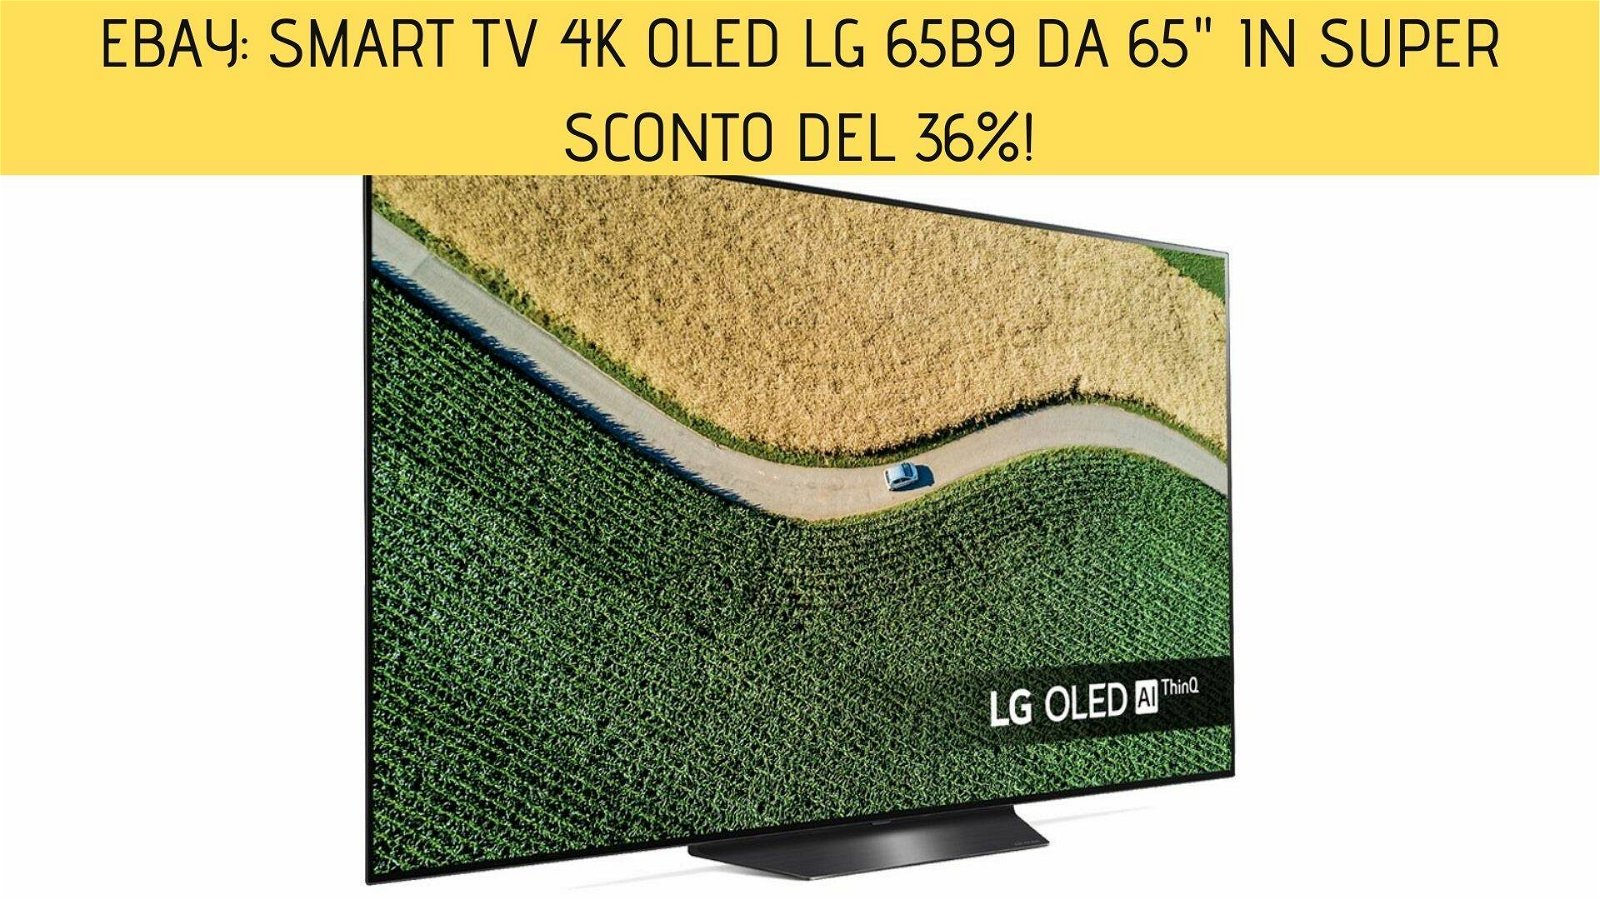 Immagine di eBay: smart TV 4K OLED LG 65B9 da 65" in super sconto del 36%!